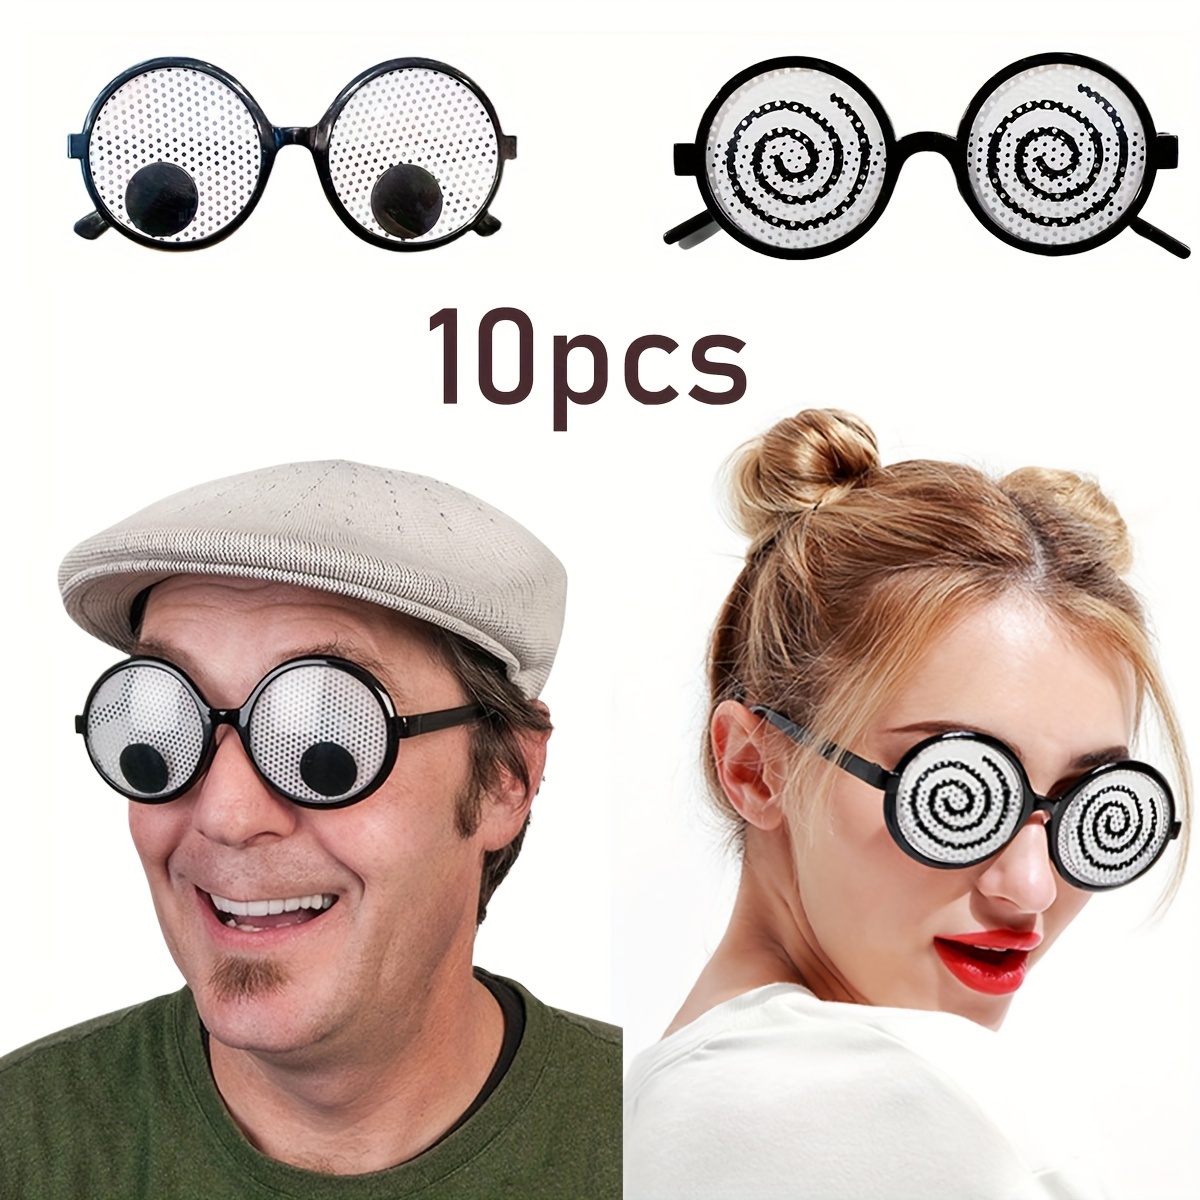 Googly Eyes Glasses - Plastic Round Giant Eye Glasses Party Favors, Fun Party Toys, Funny Shaking Practical Jokes - 6 pk, Adult Unisex, Black